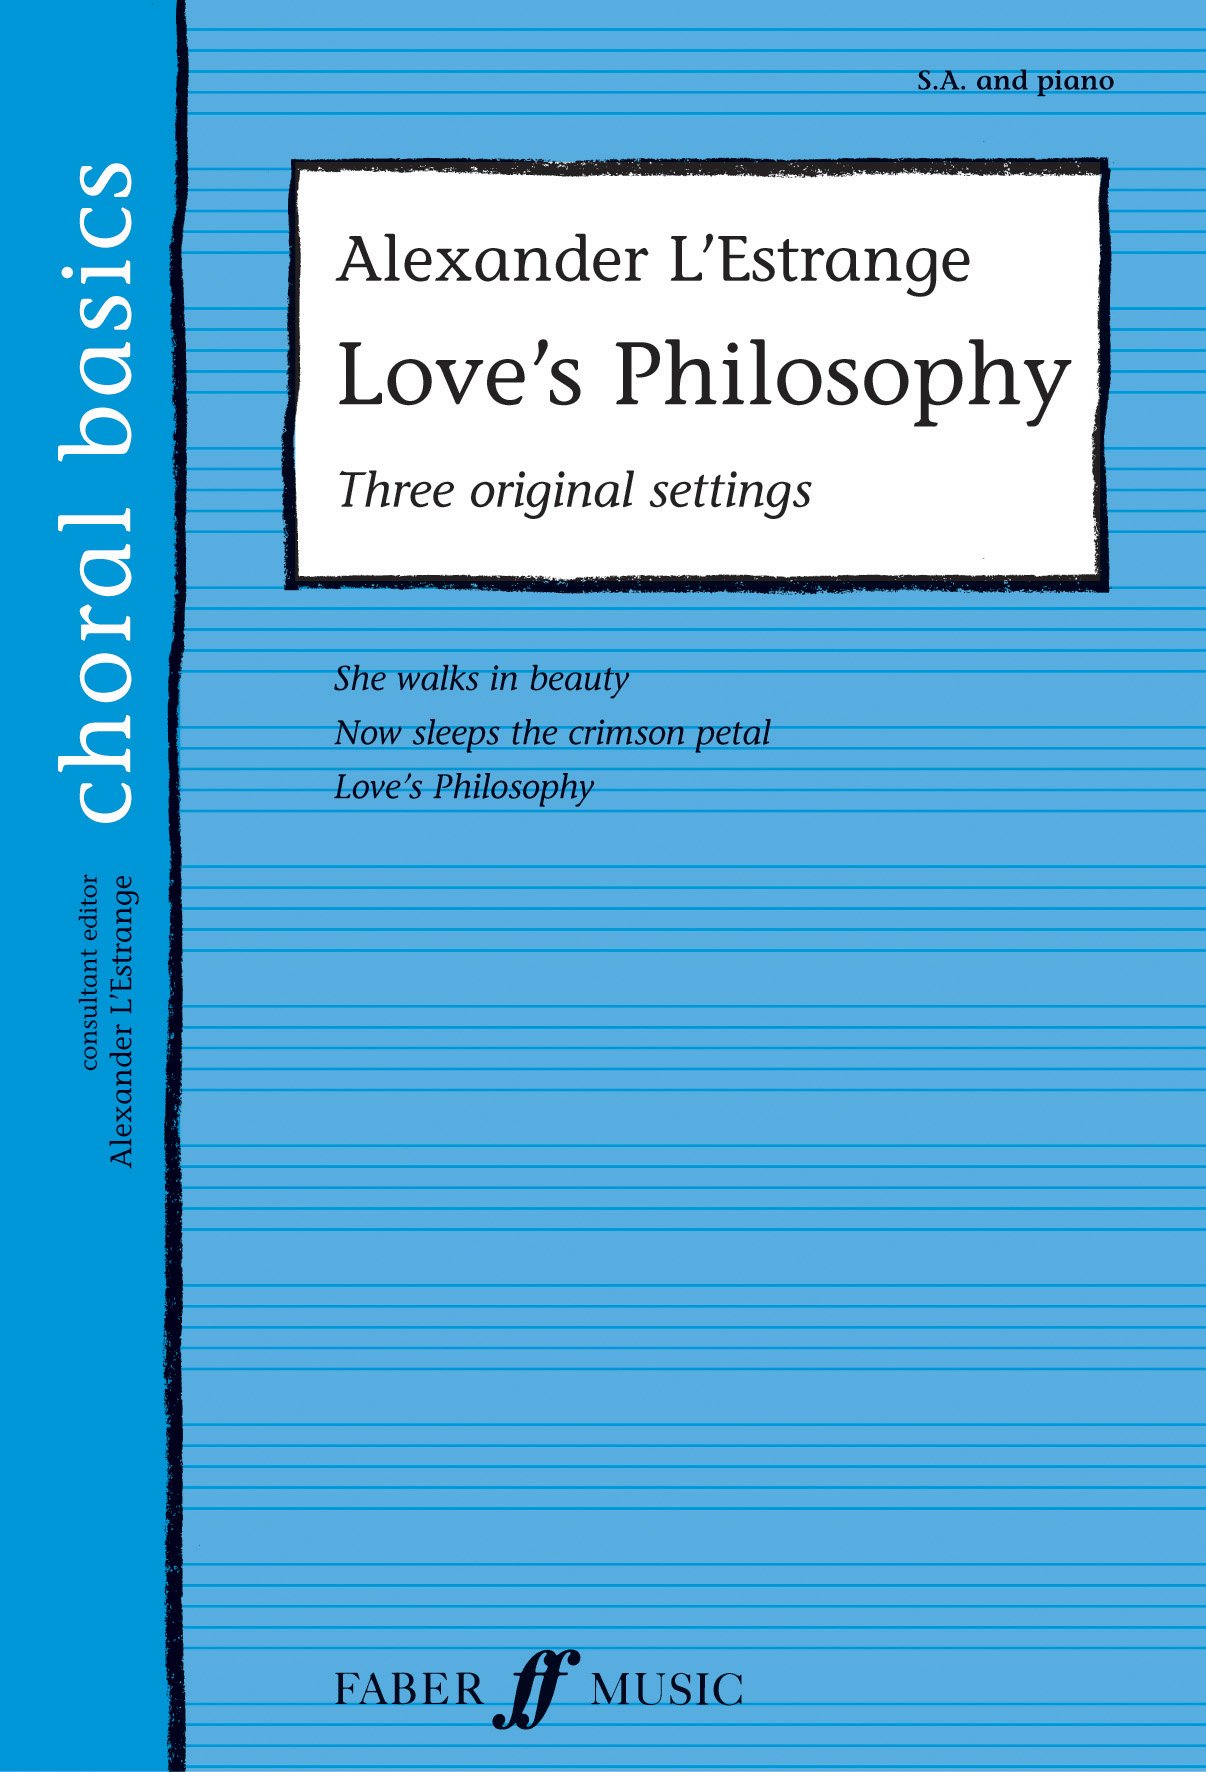 Love's Philosophy SA + piano COVER.jpg